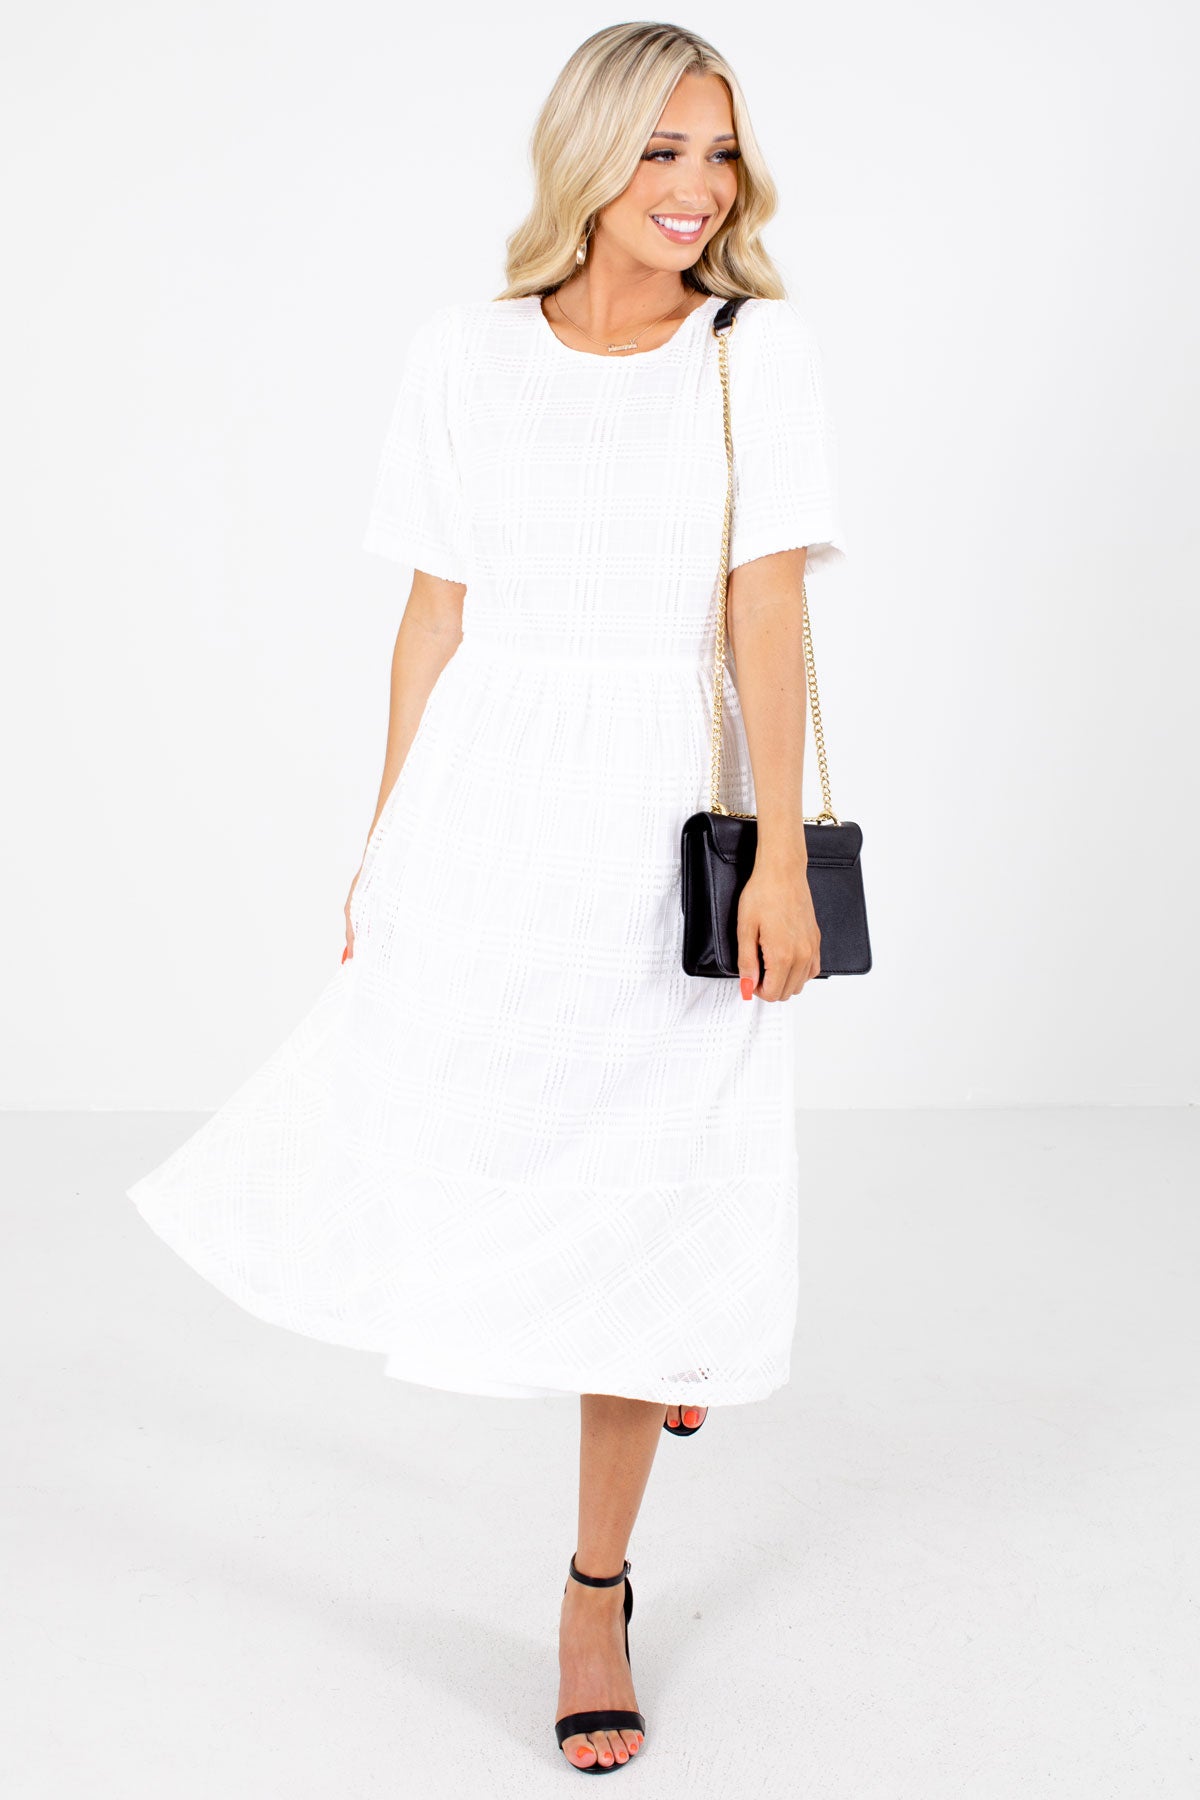 White Cute and Comfortable Boutique Midi Dresses for Women